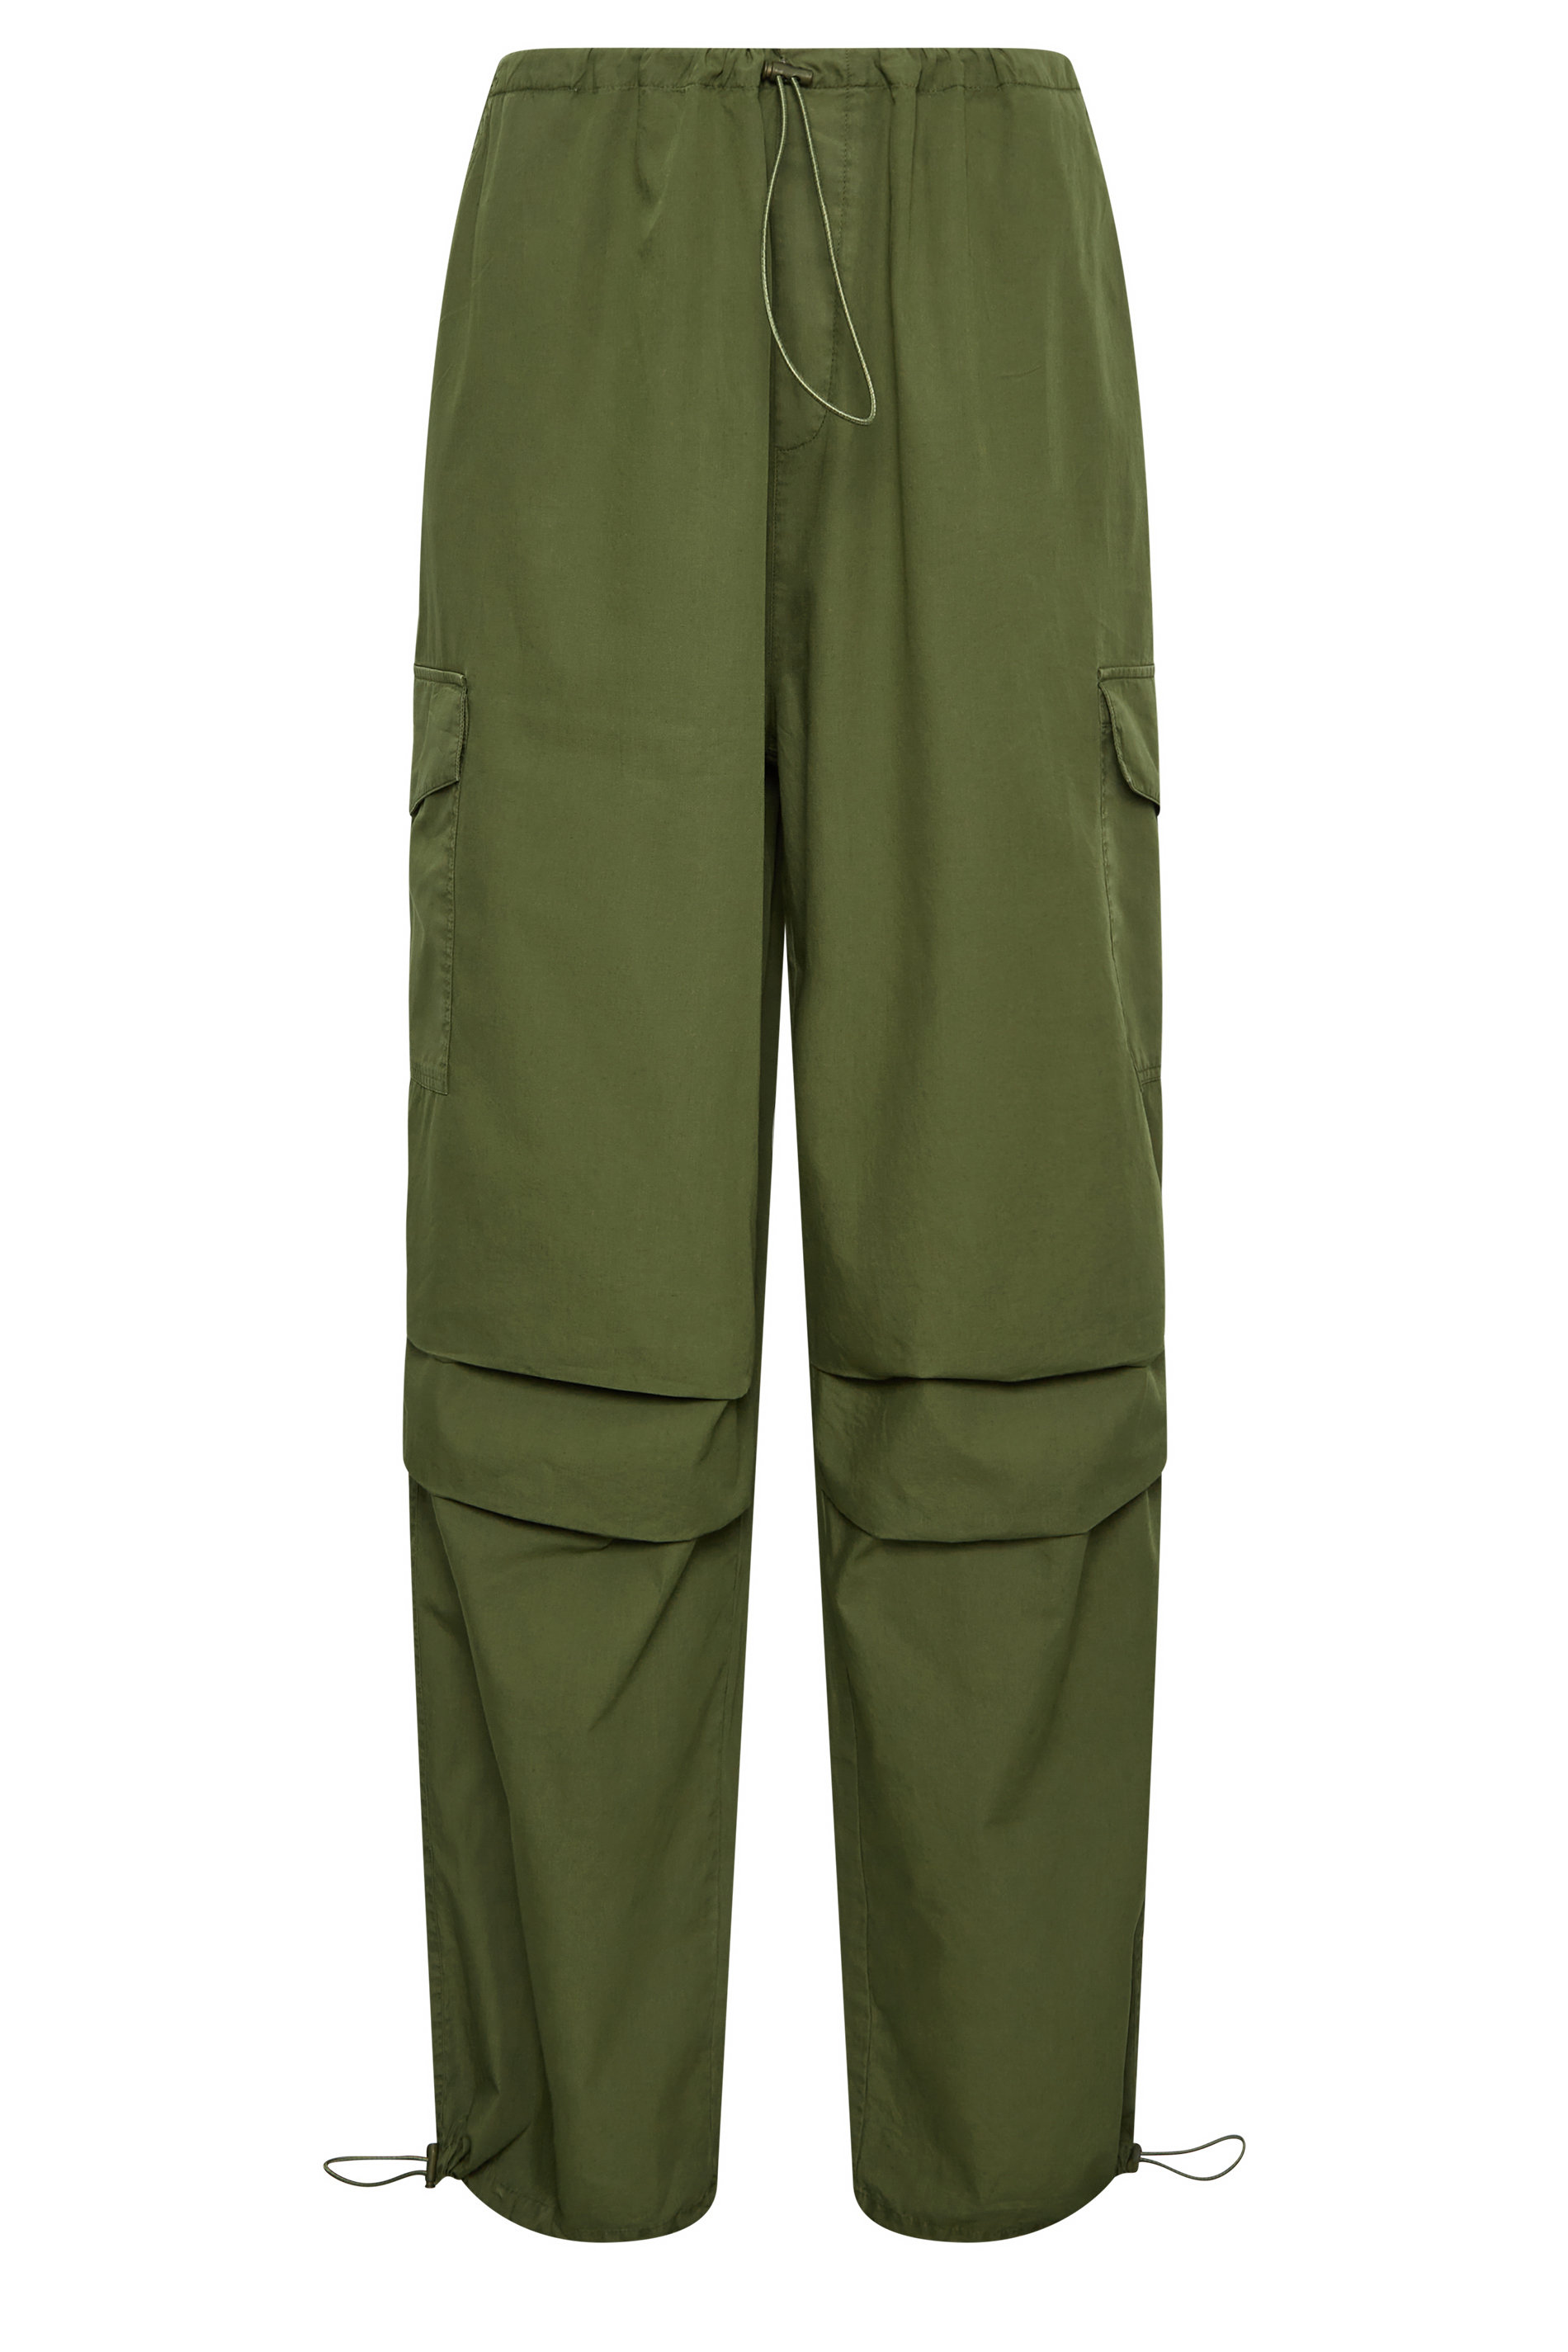 LTS Tall Women's Khaki Green Parachute Trousers | Long Tall Sally 1